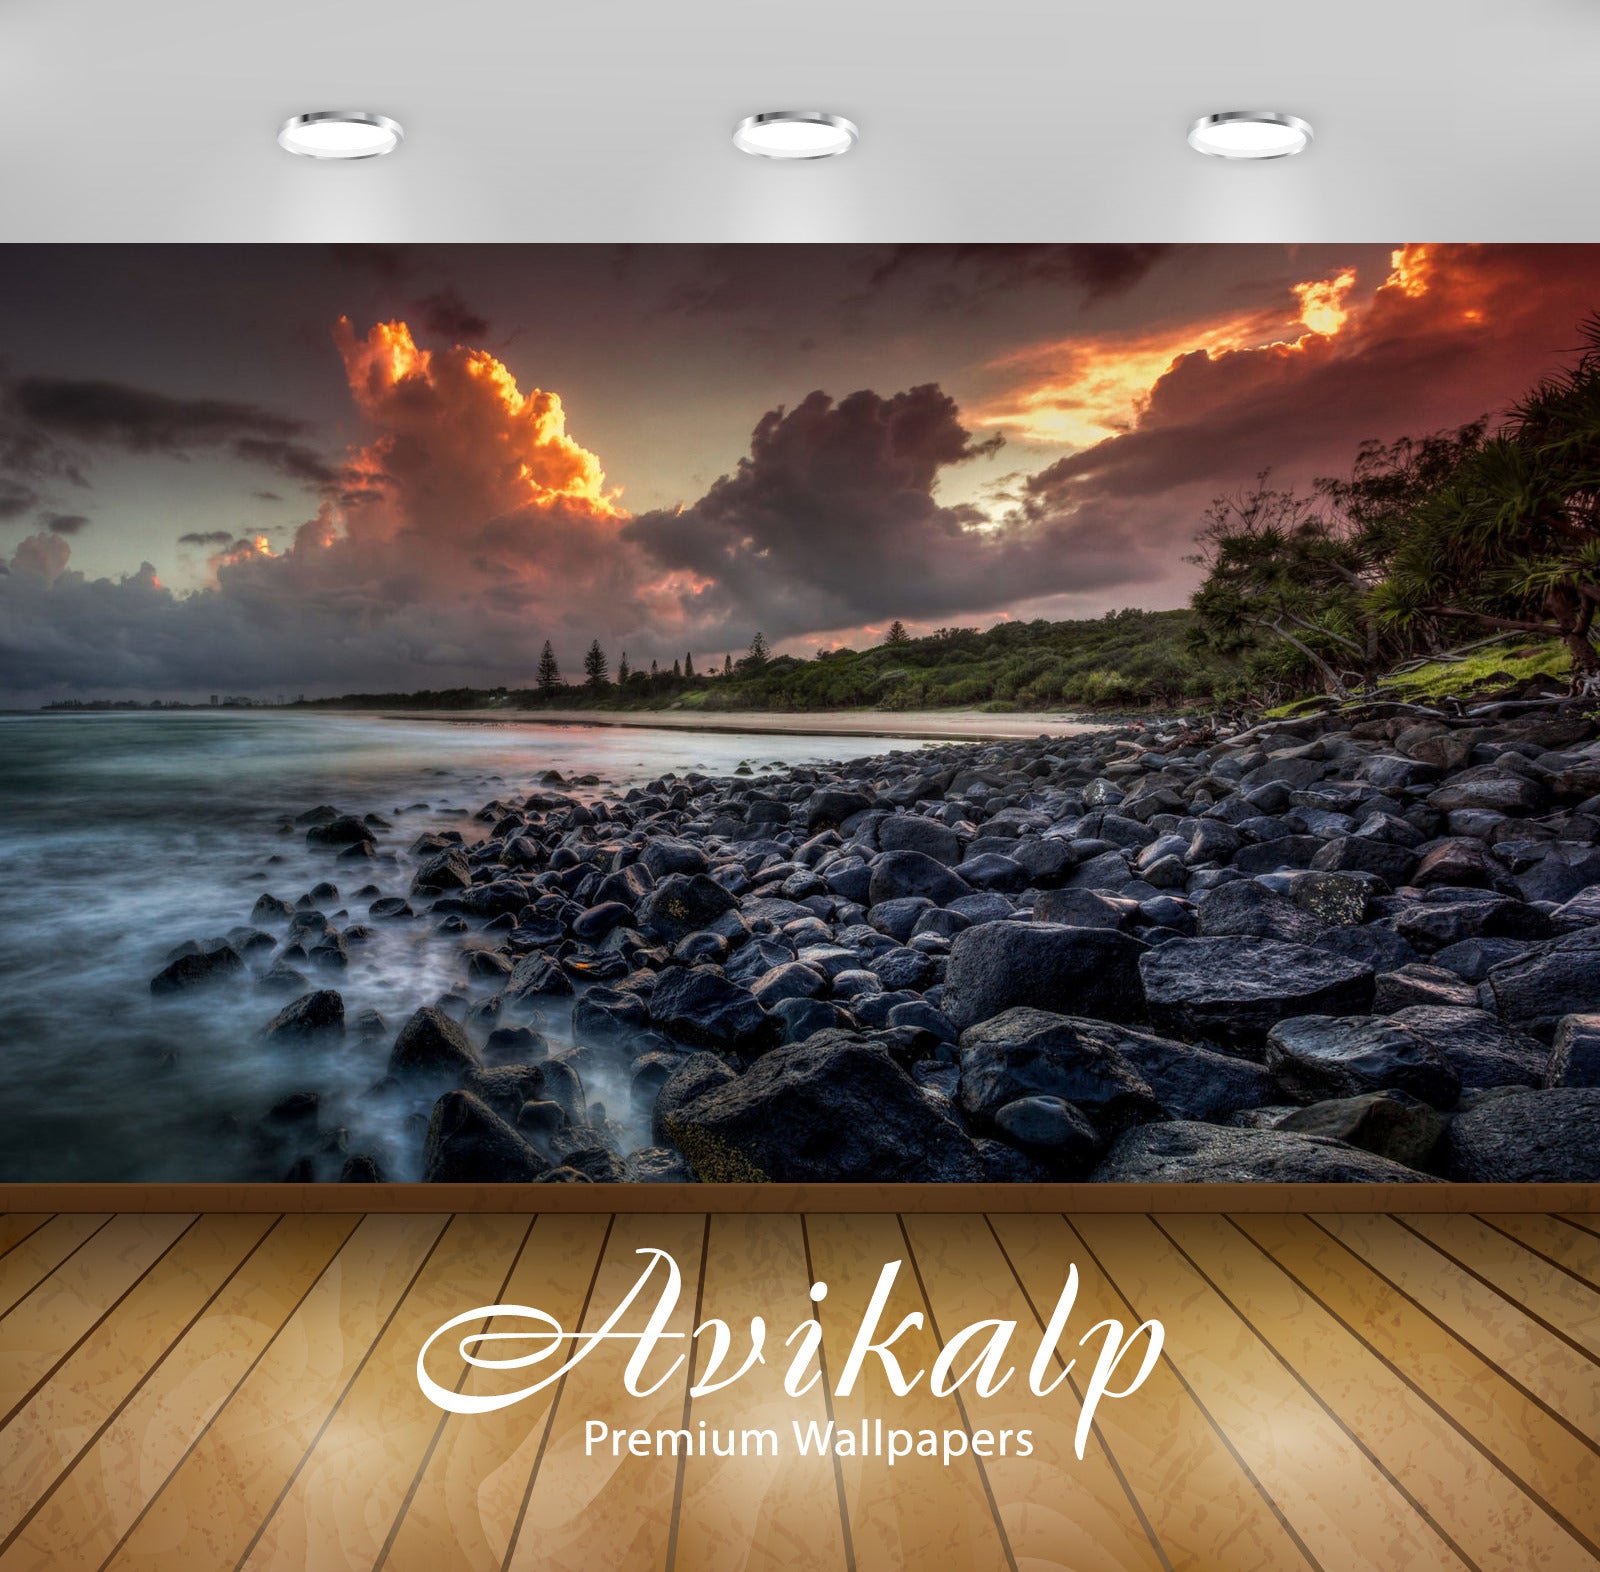 Avikalp Exclusive Awi2780 Landscape Sunset Sea Waves Beach Rocks Sand Sky Dark Clouds Full HD Wallpa